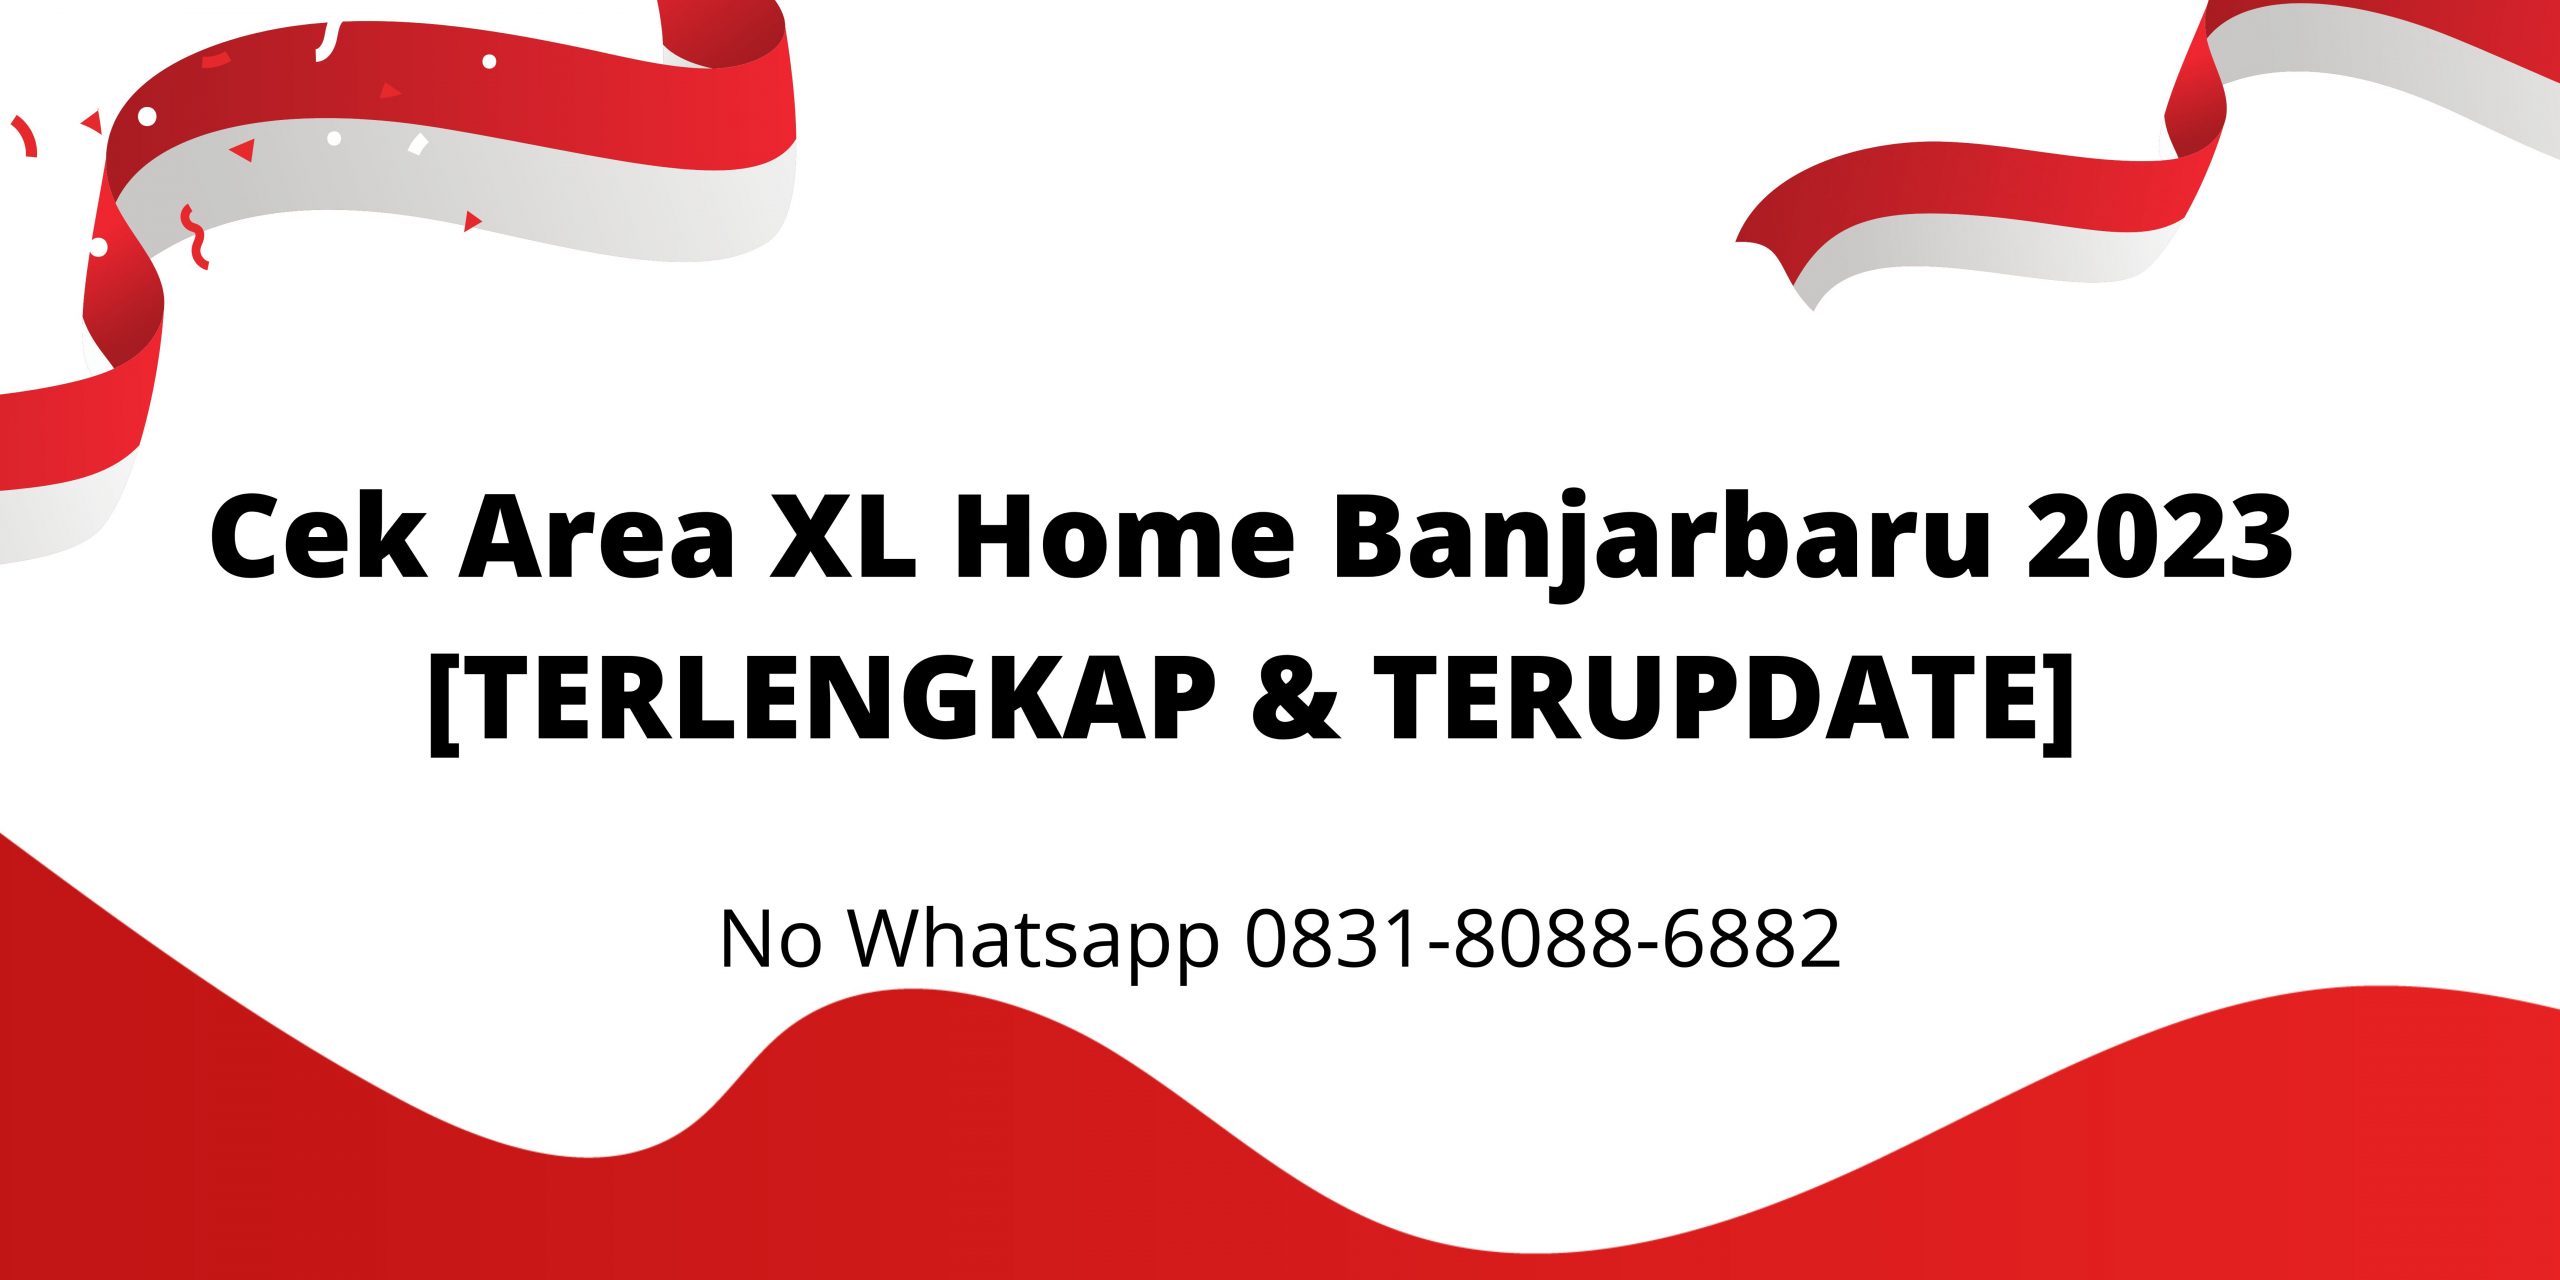 Cek Area XL Home Banjarbaru